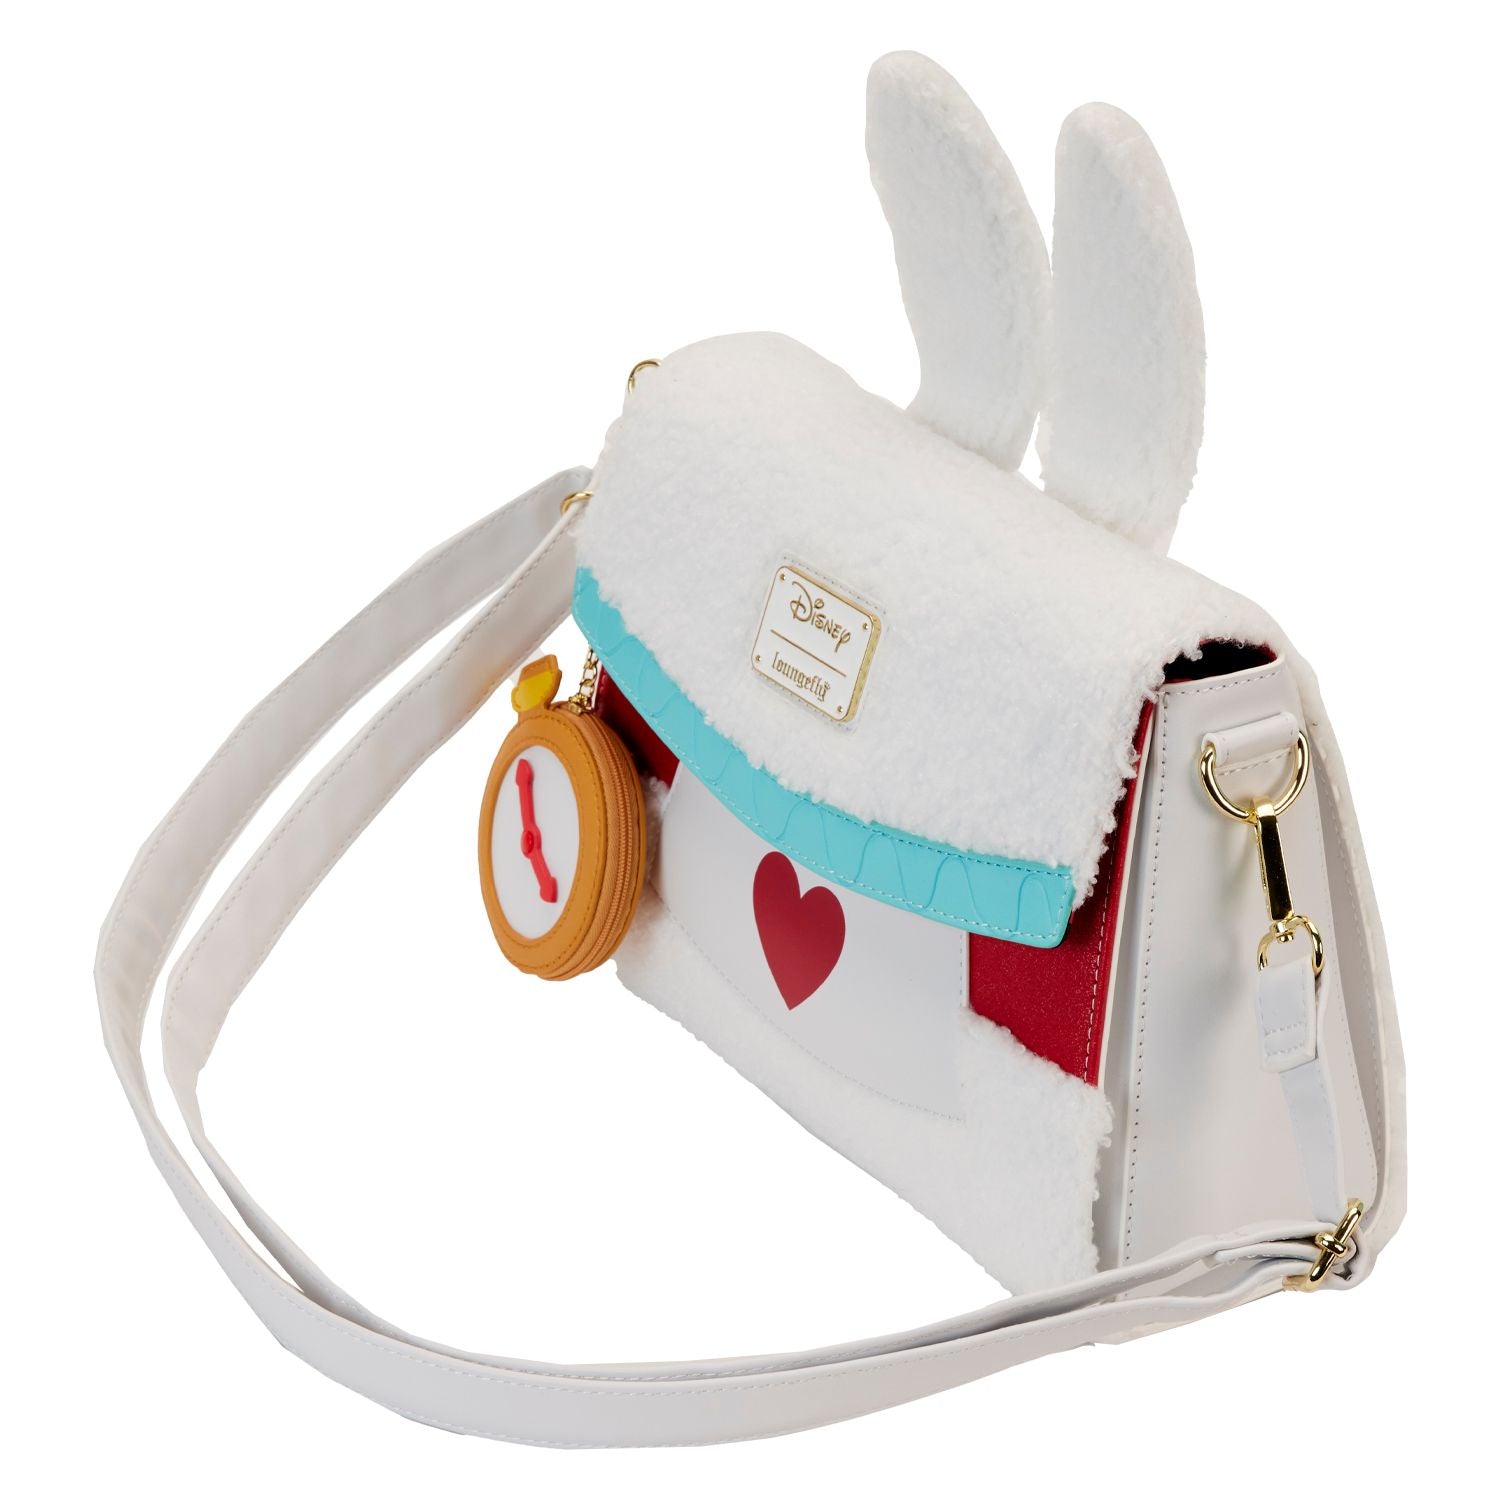 2021 Disney x Kate Spade Alice in Wonderland Tote Bag Purse White Rabbit